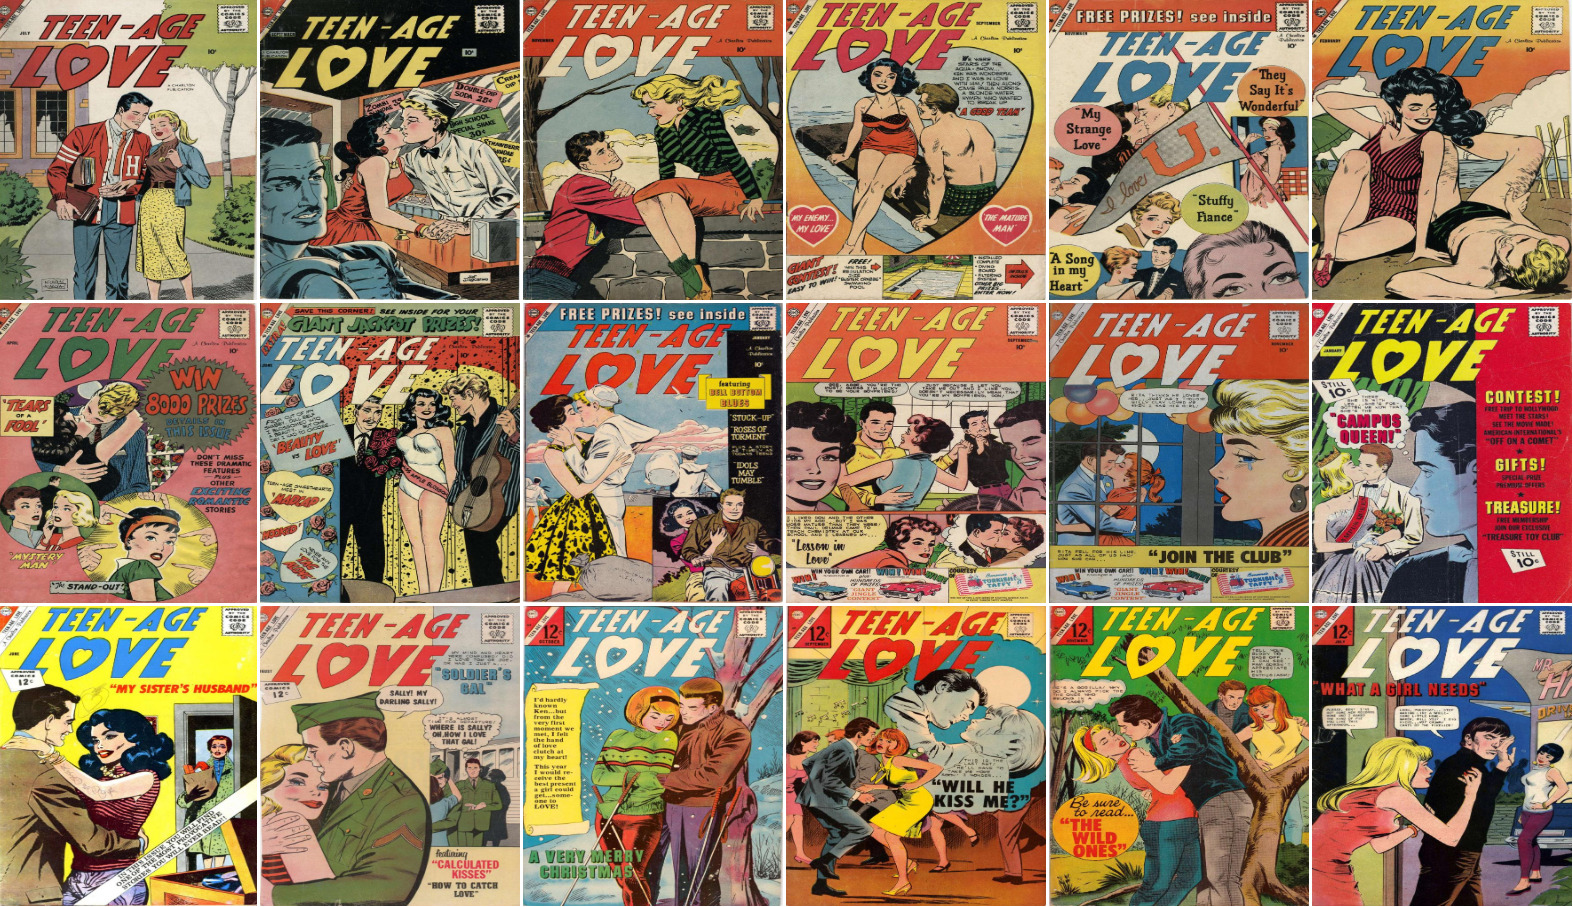 1958 - 1967 Teen-Age Love Comic Book Package - 18 eBooks on CD